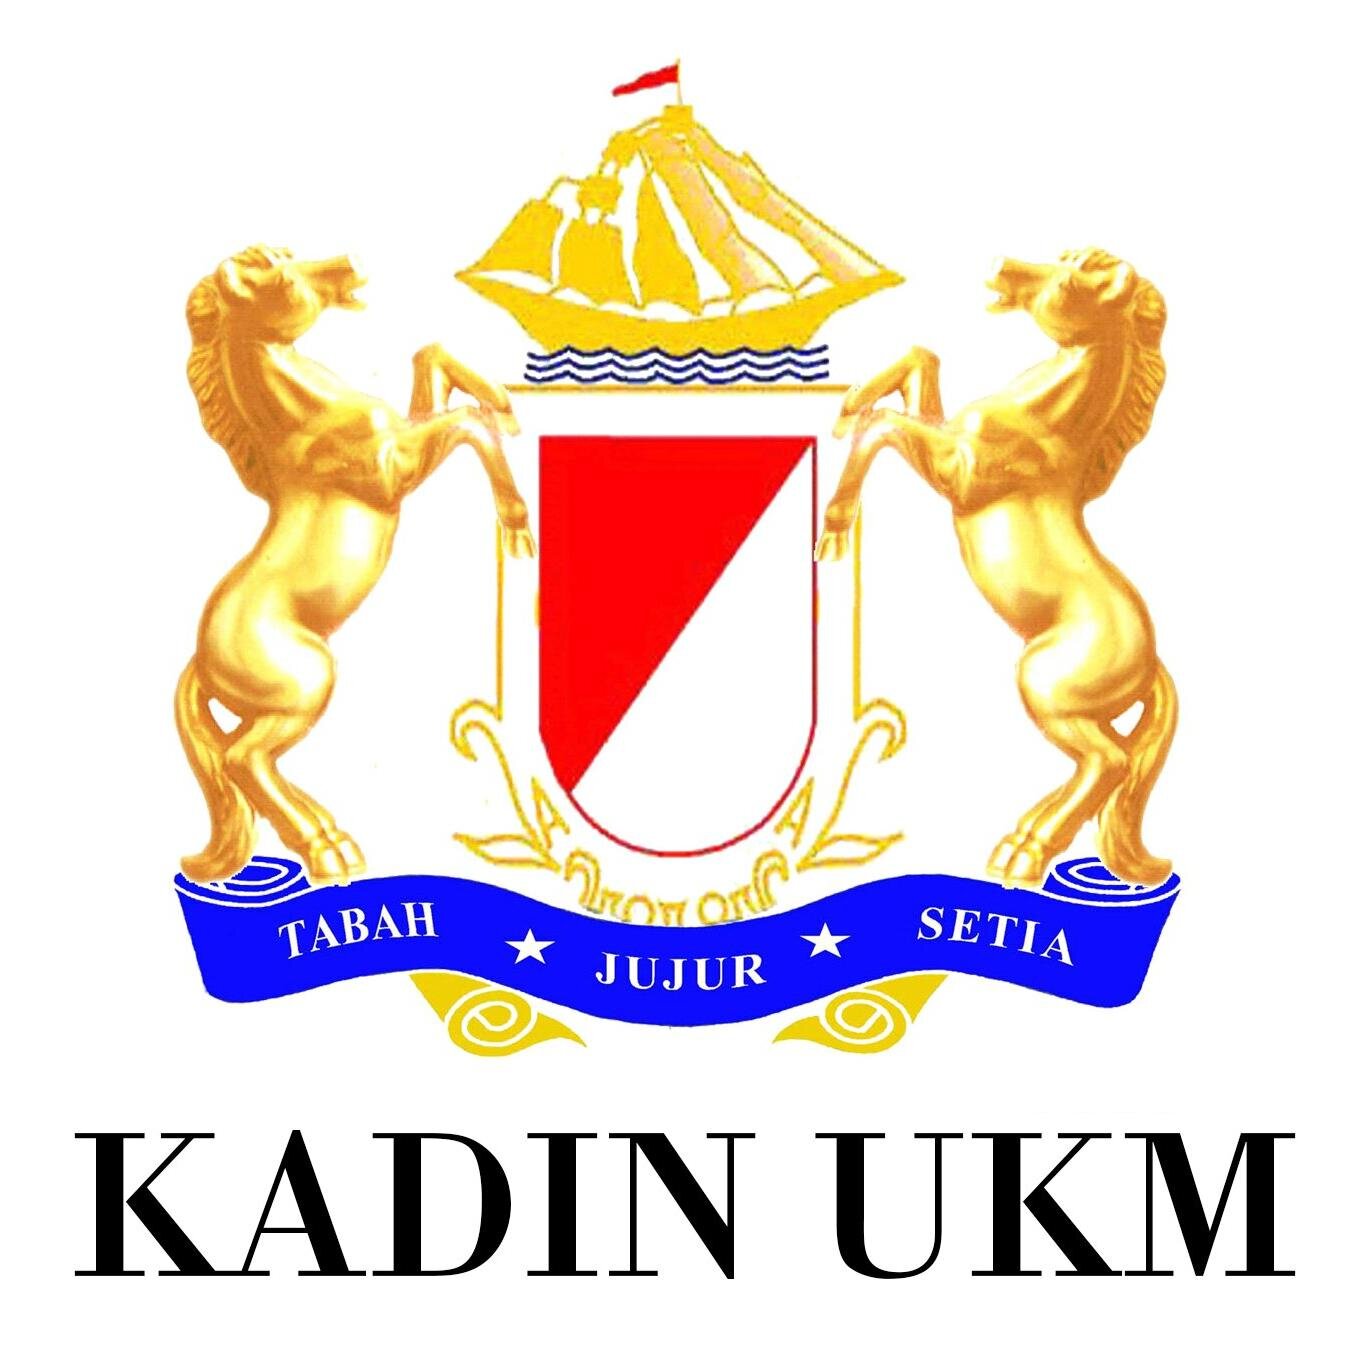 KADIN UKM Center